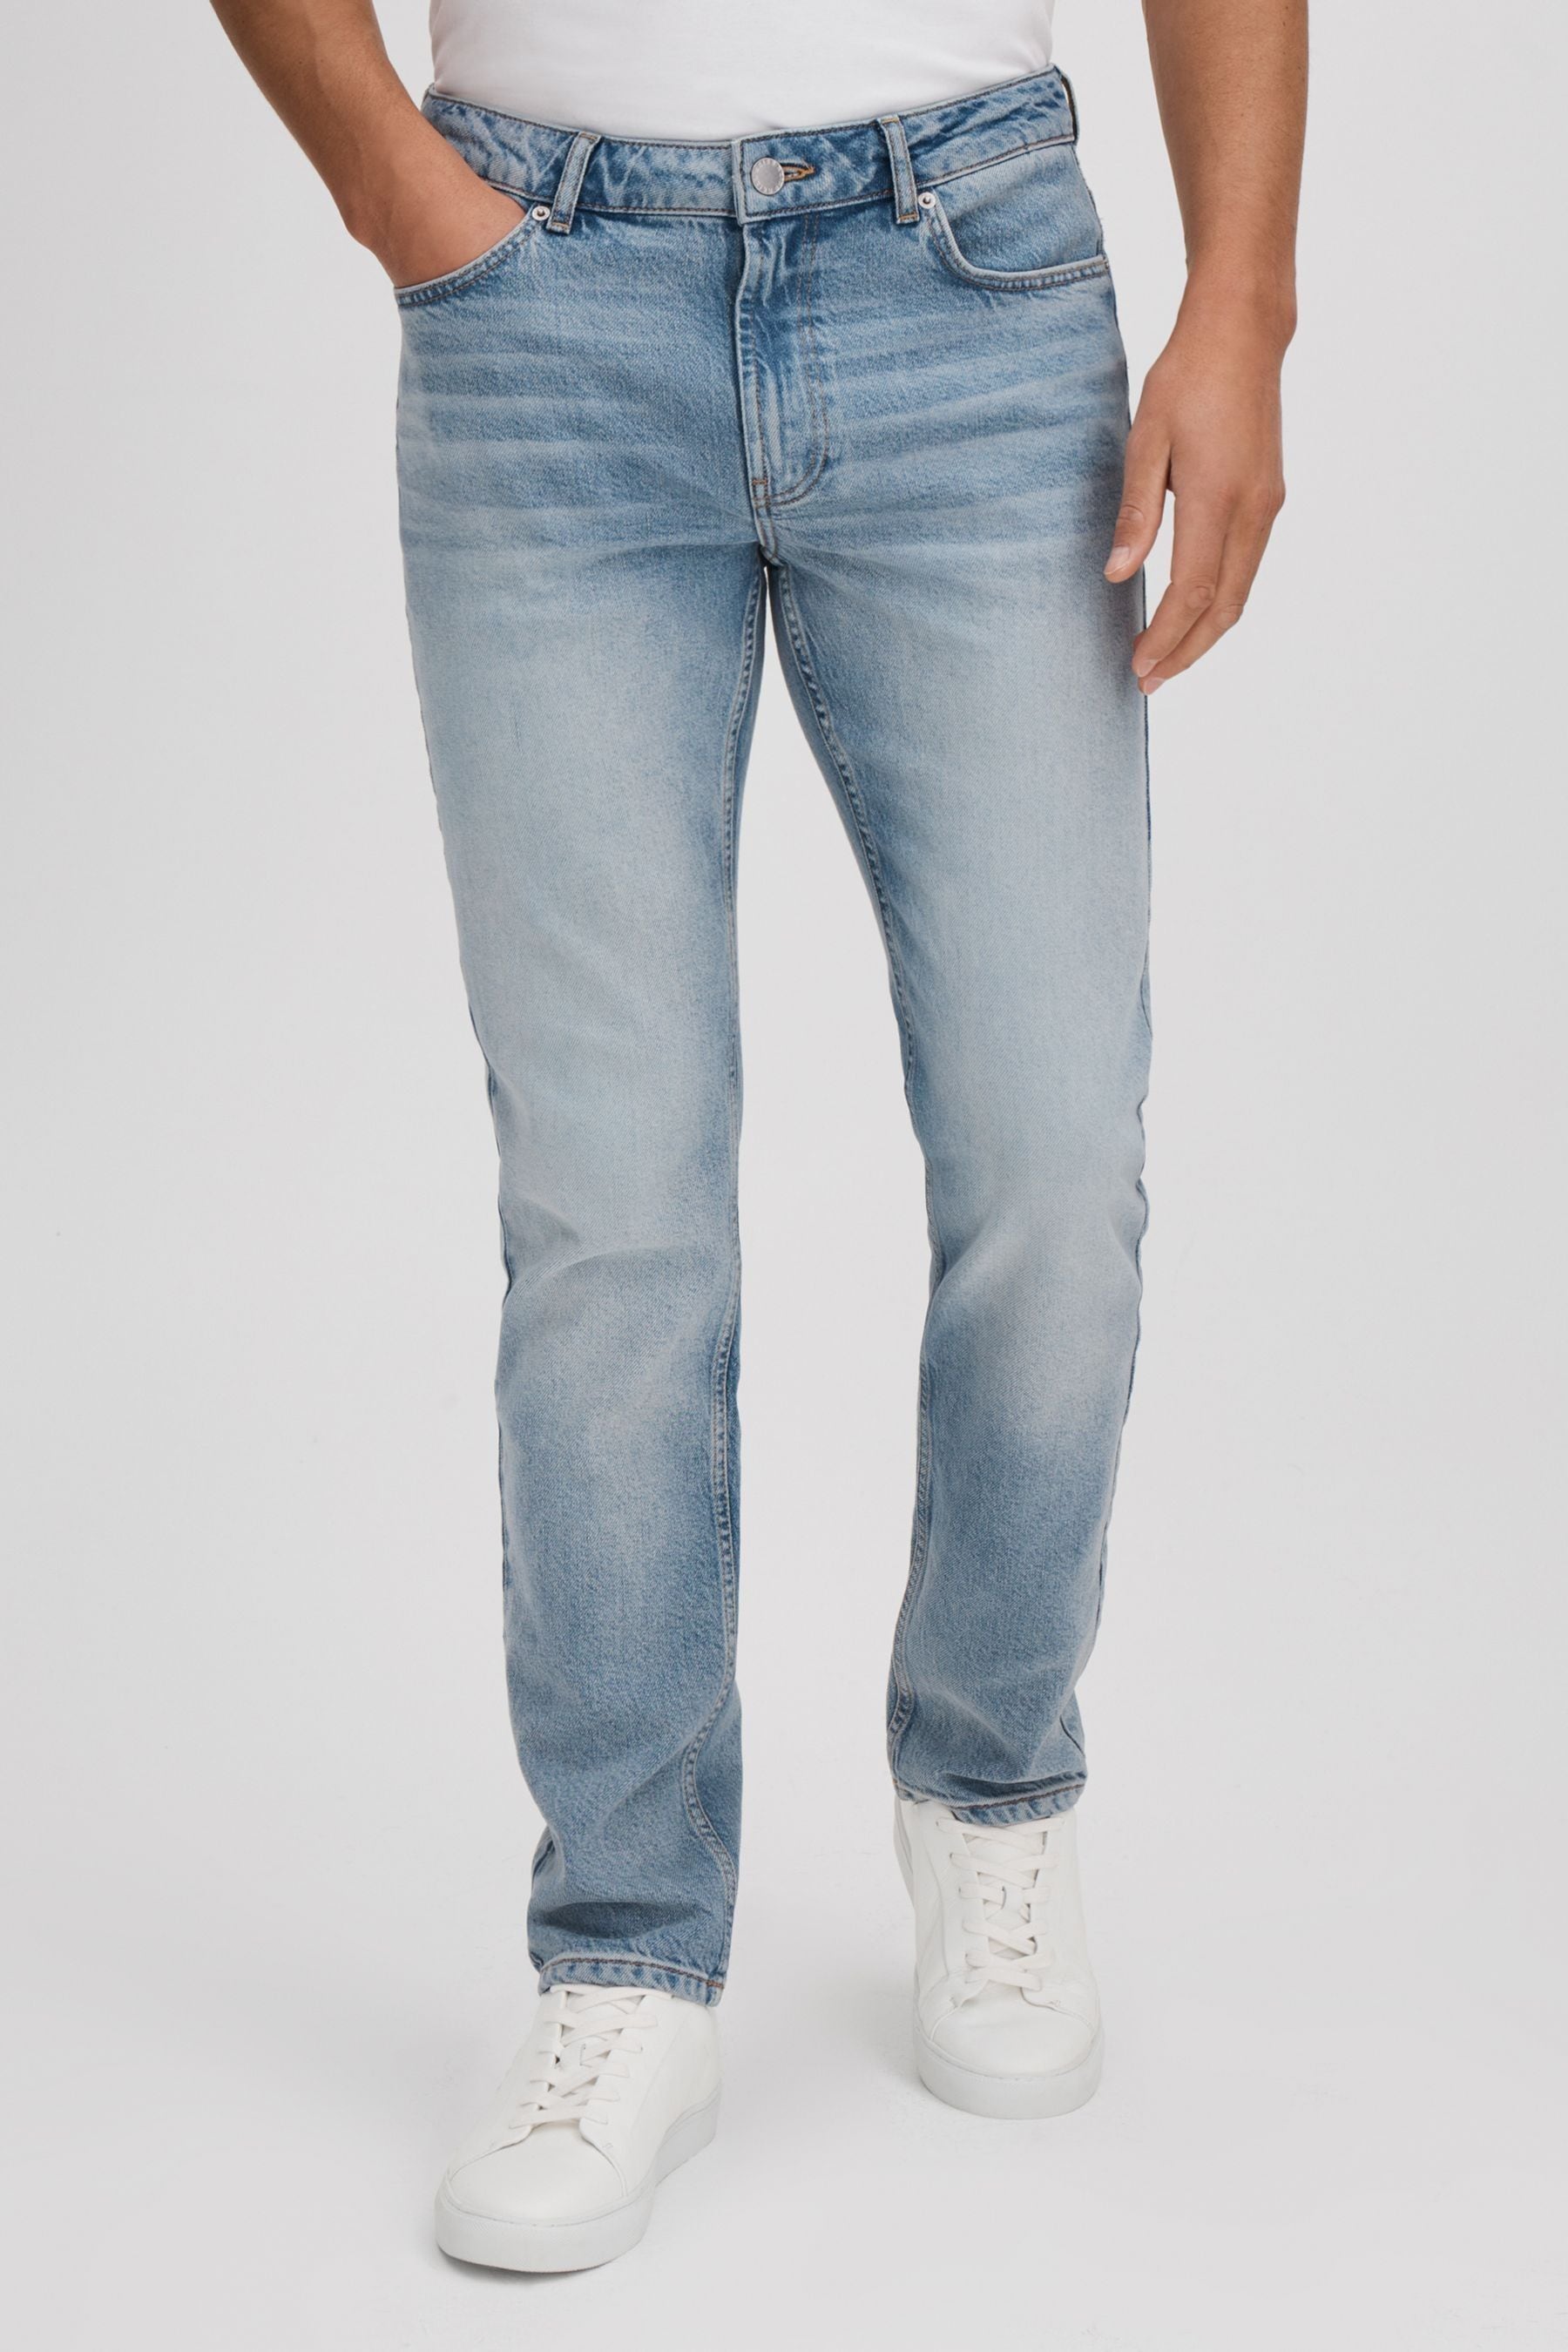 Reiss Ordu - Light Blue Slim Fit Washed Jeans, 28